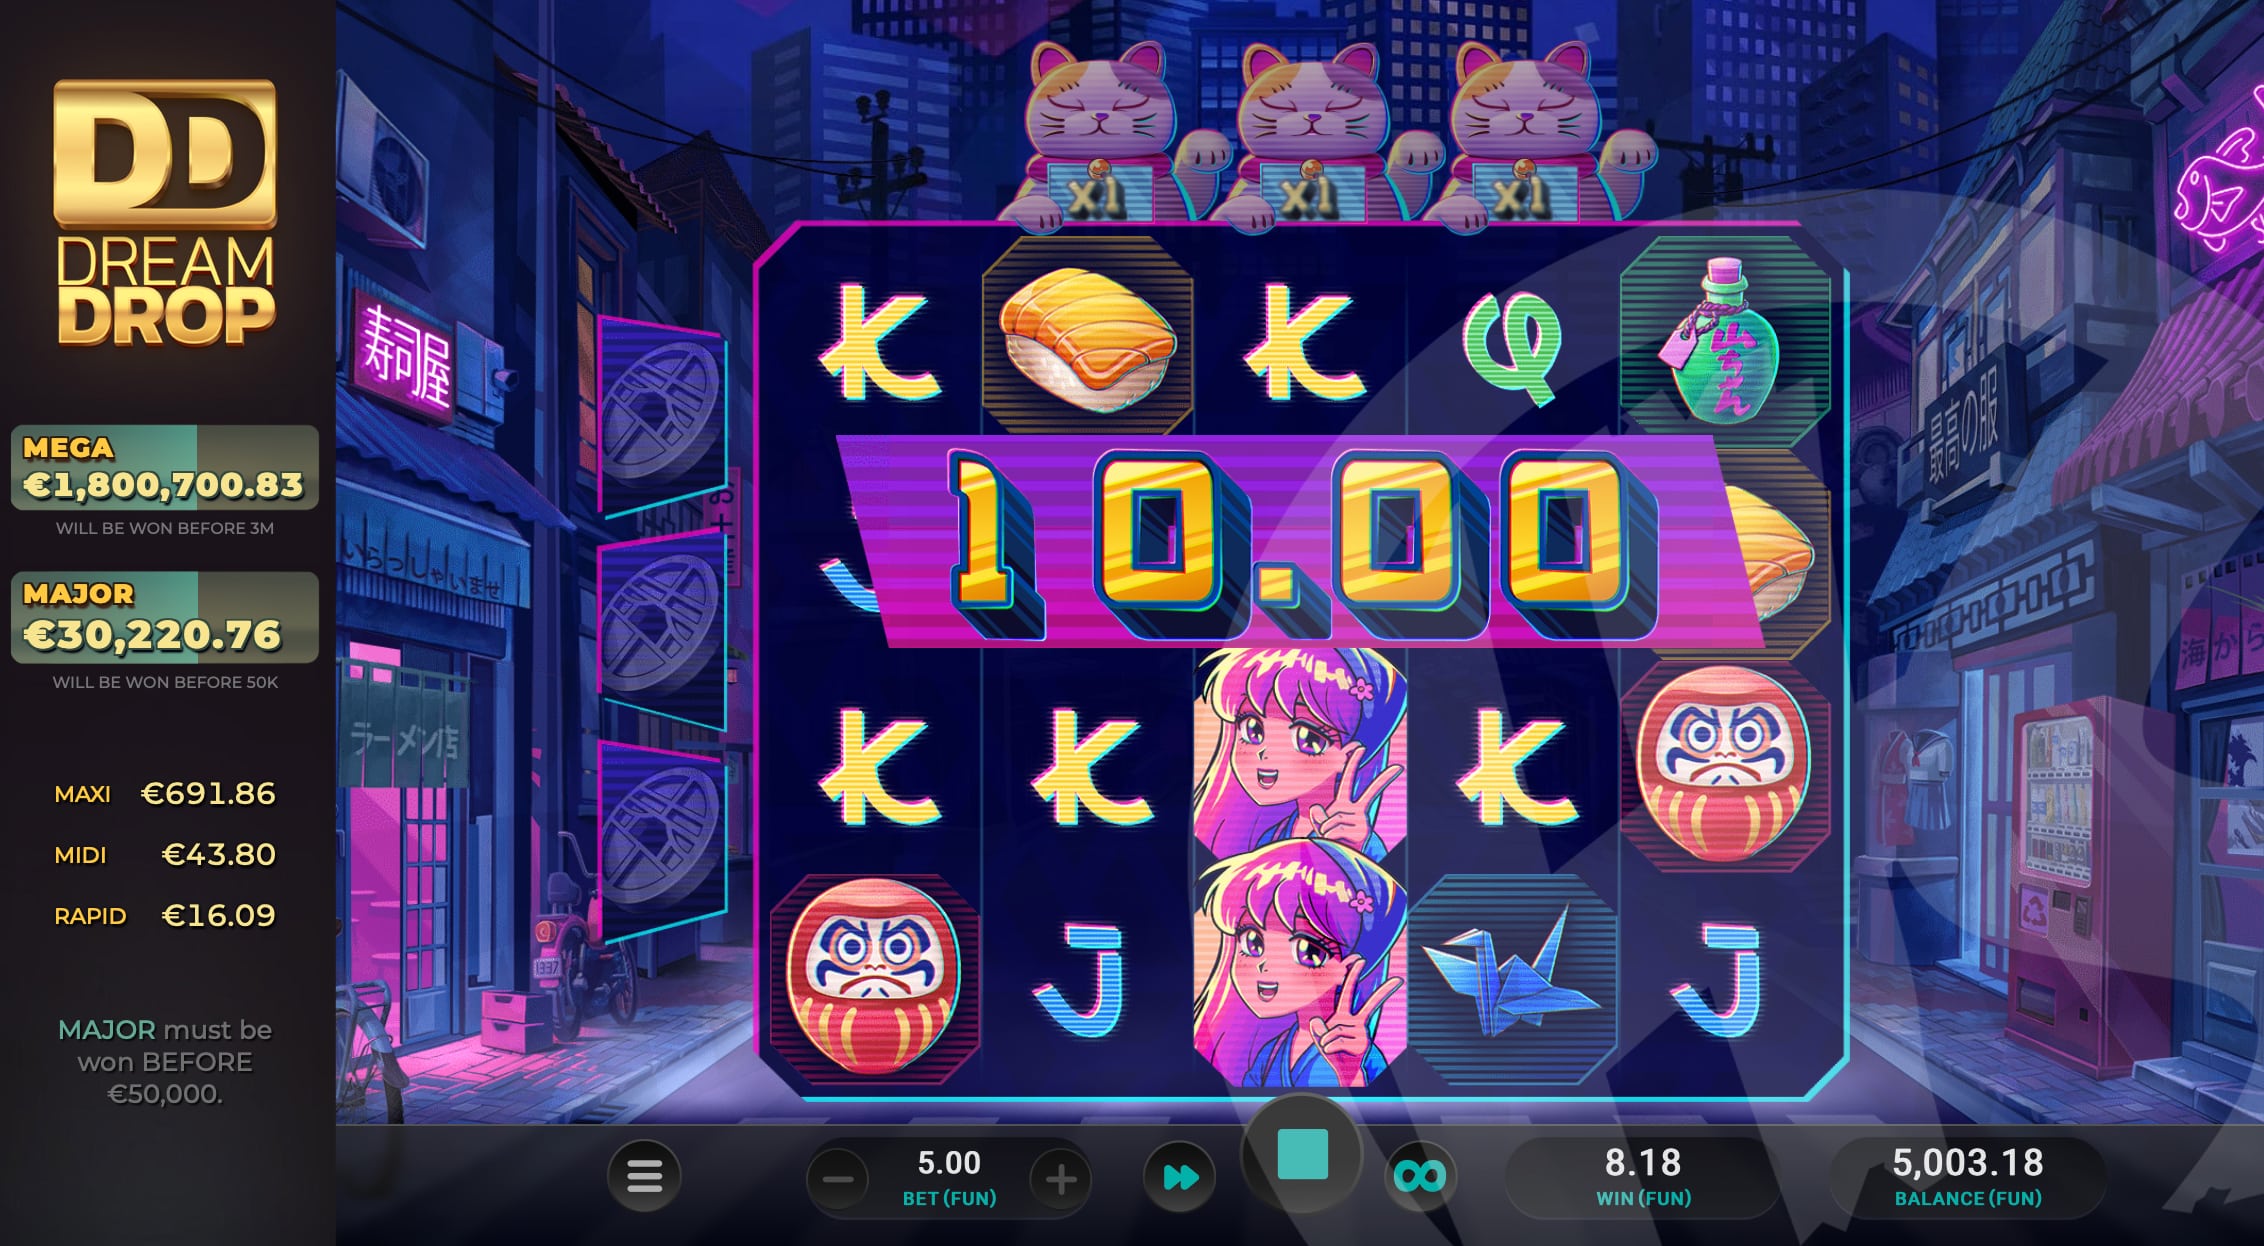 Neko Night Features 1,024 Ways to Win